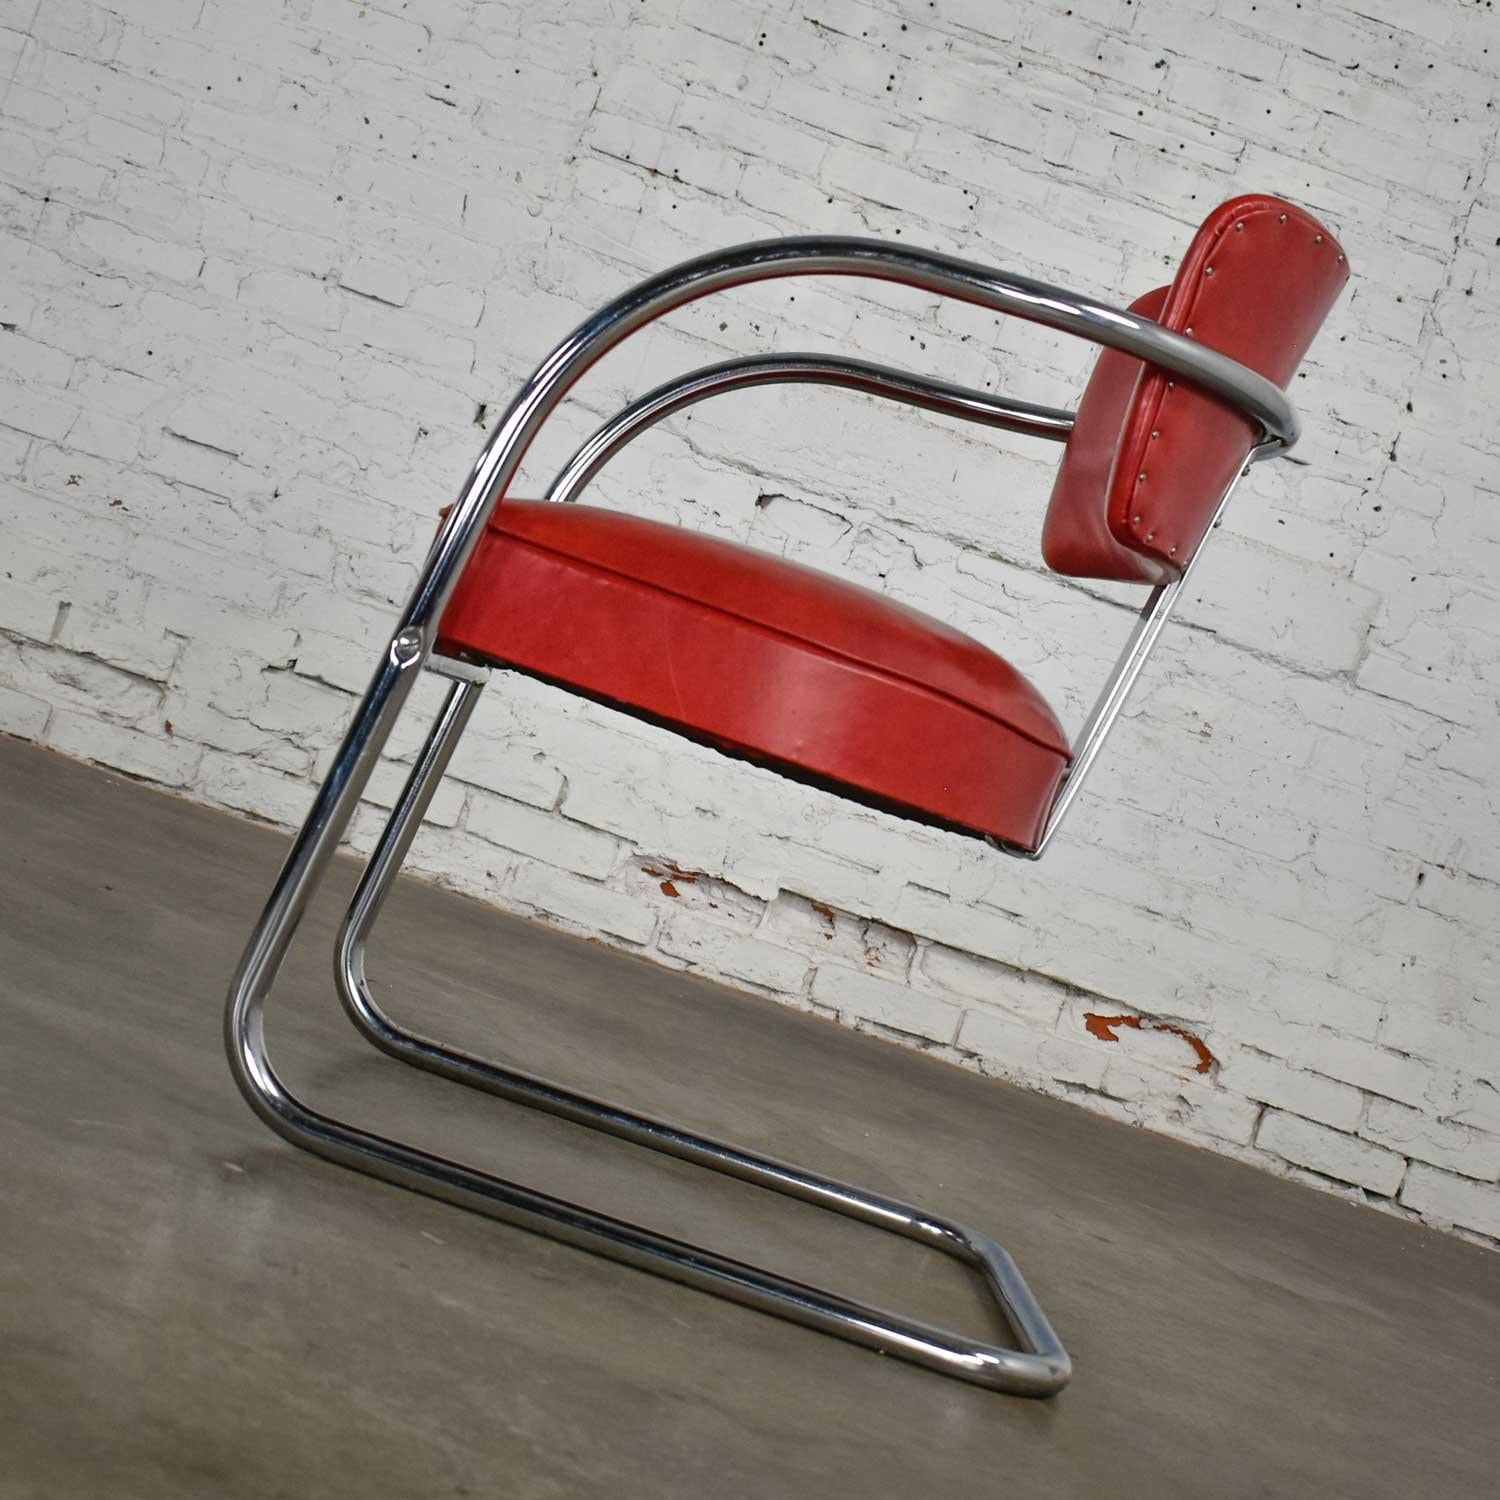 Streamline Art Deco Cantilever Chair Chrome & Red Vinyl Attr Kem Webber-Lloyds In Good Condition For Sale In Topeka, KS